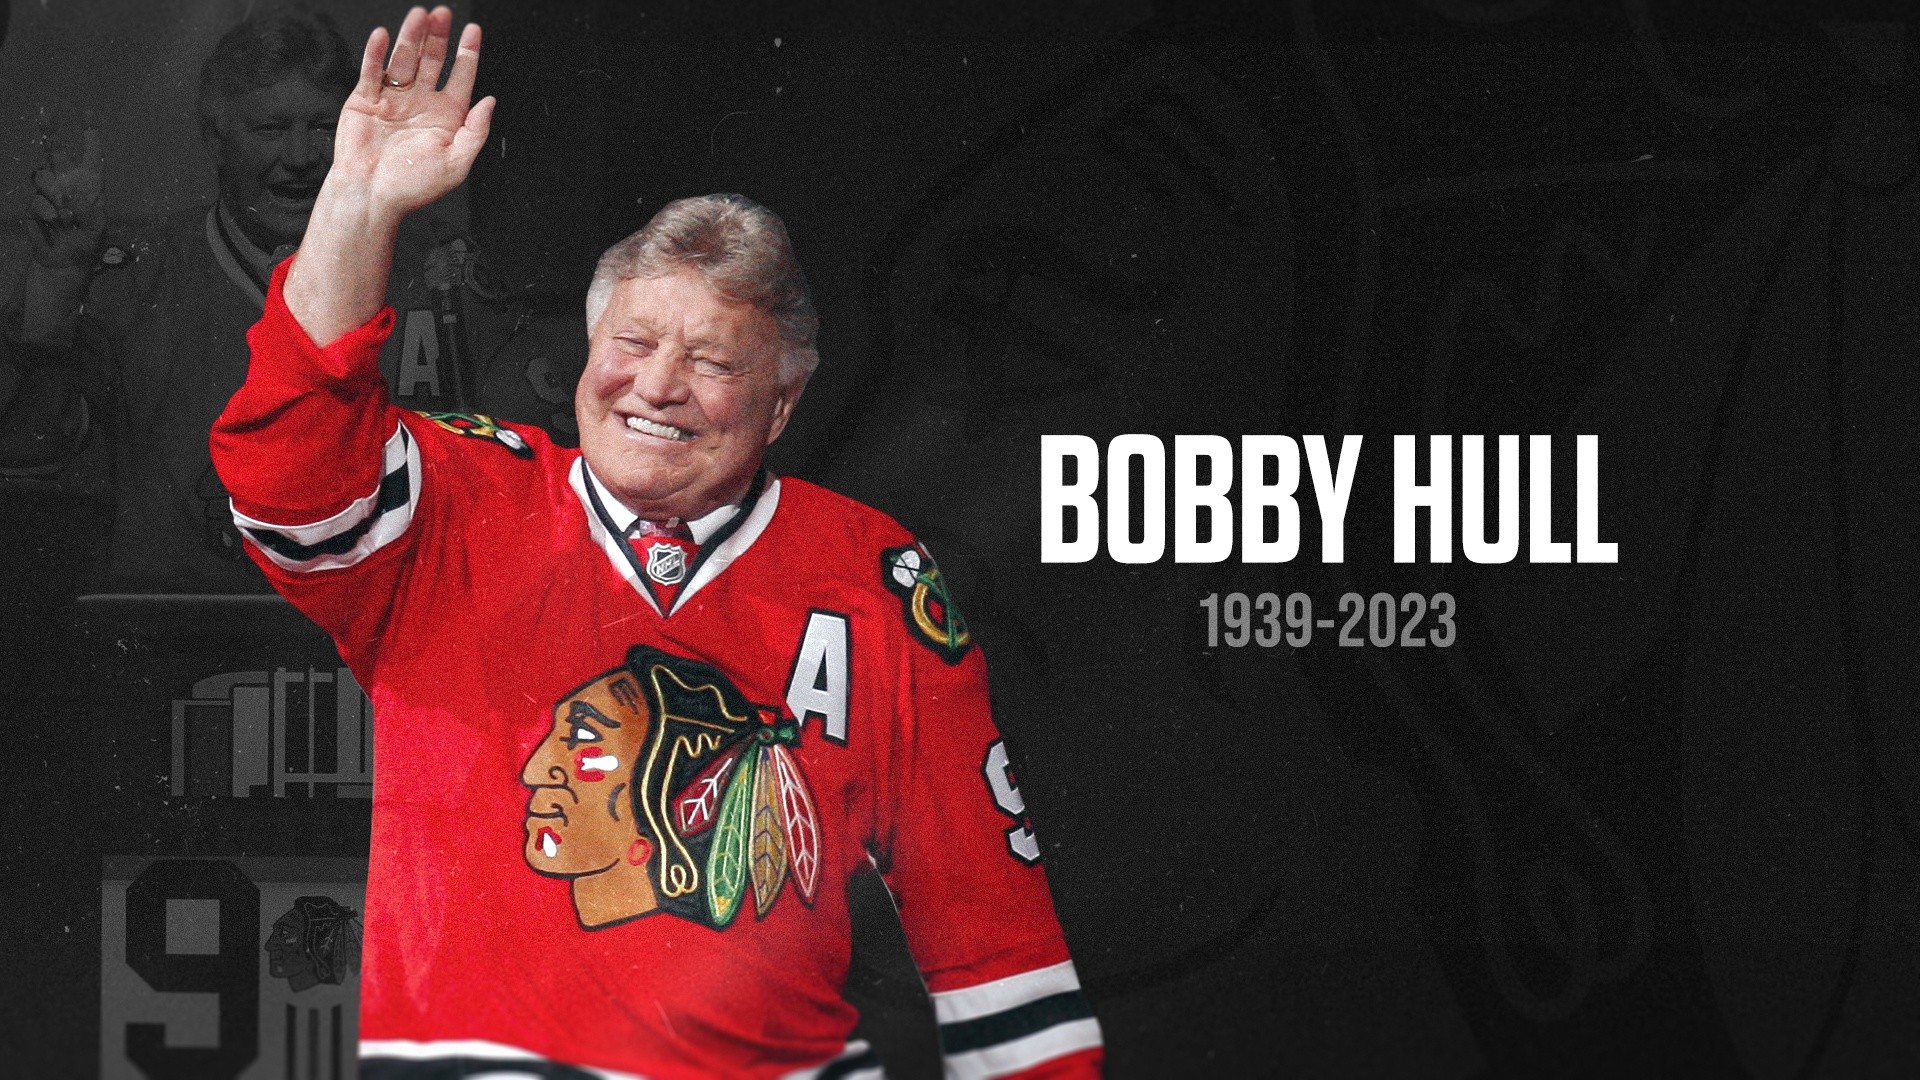 Bobby Hull, Hockey Hall Of Famer, Dies At 84